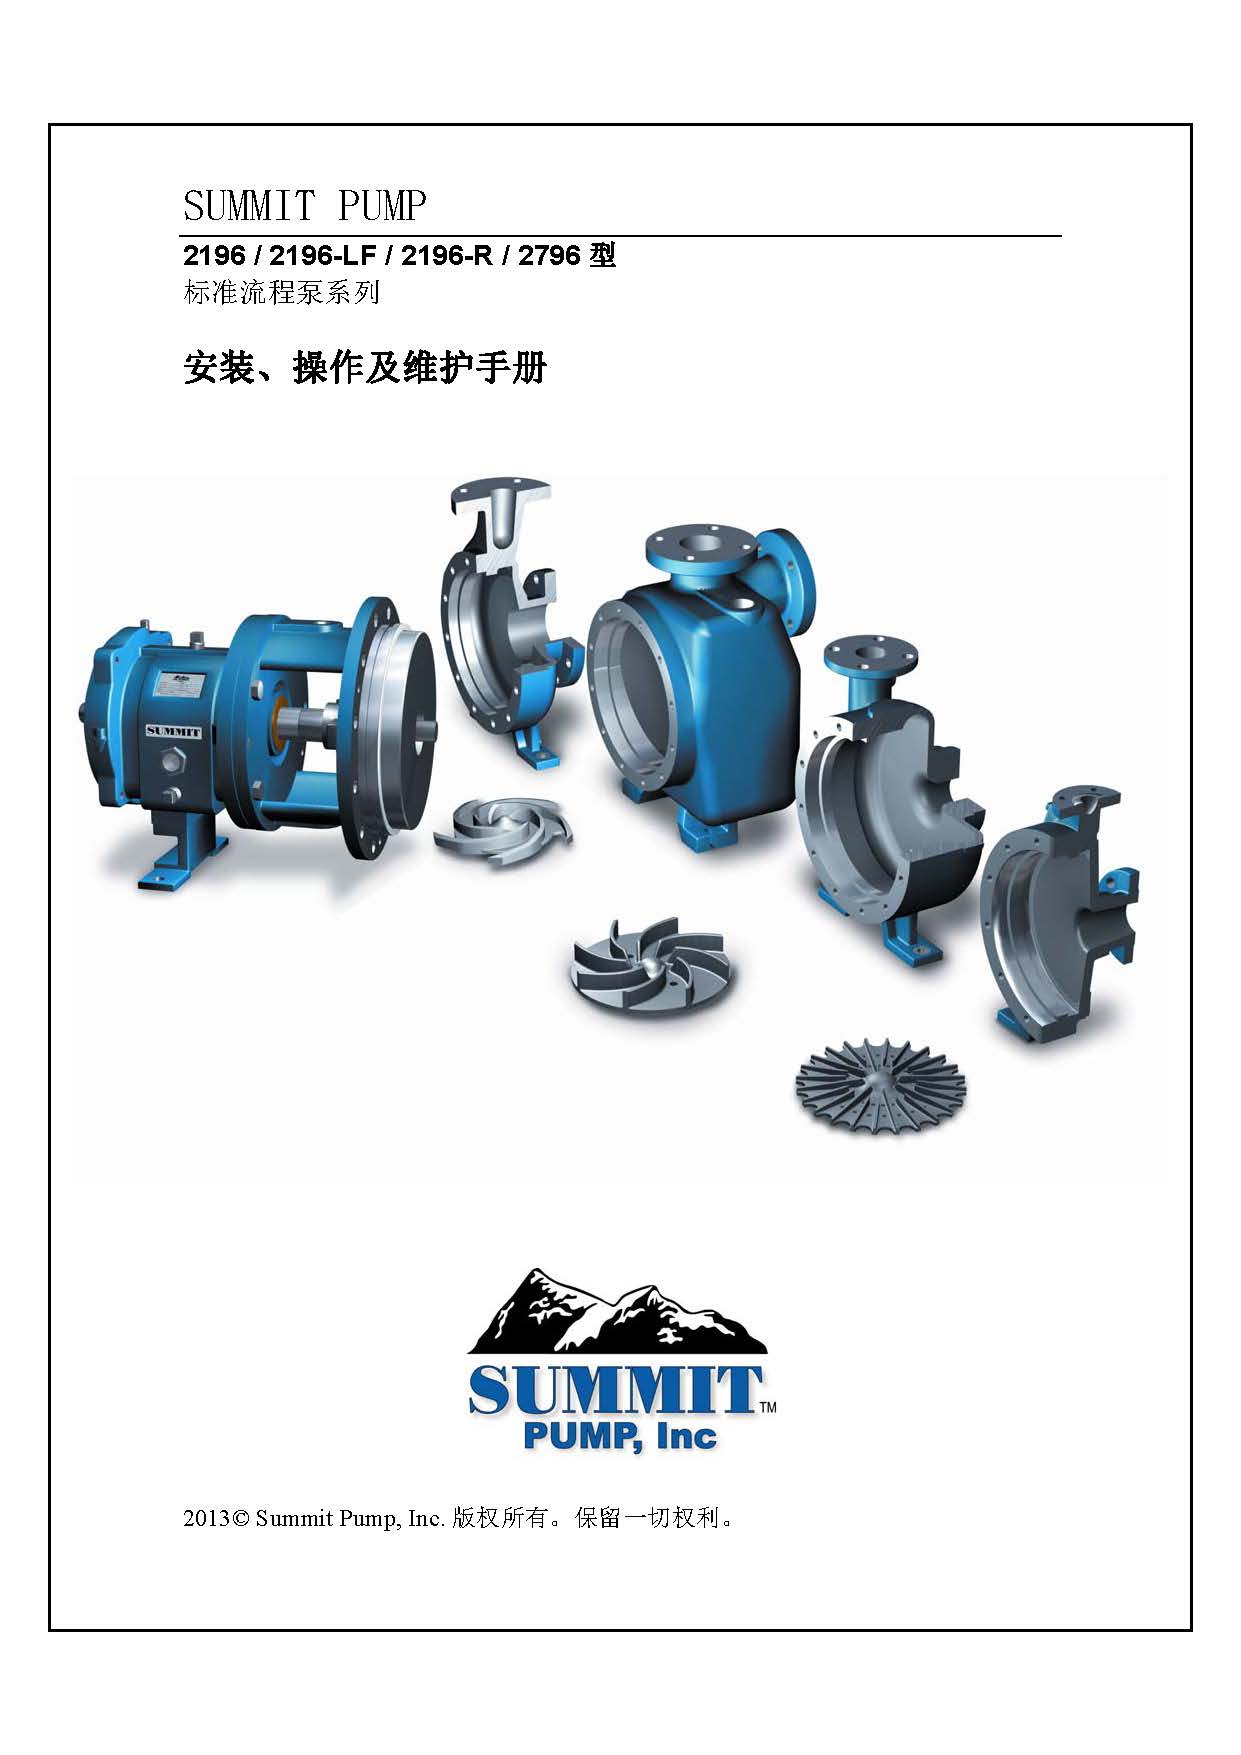 Summit 2196 ANSI Pump Manual - Chinese